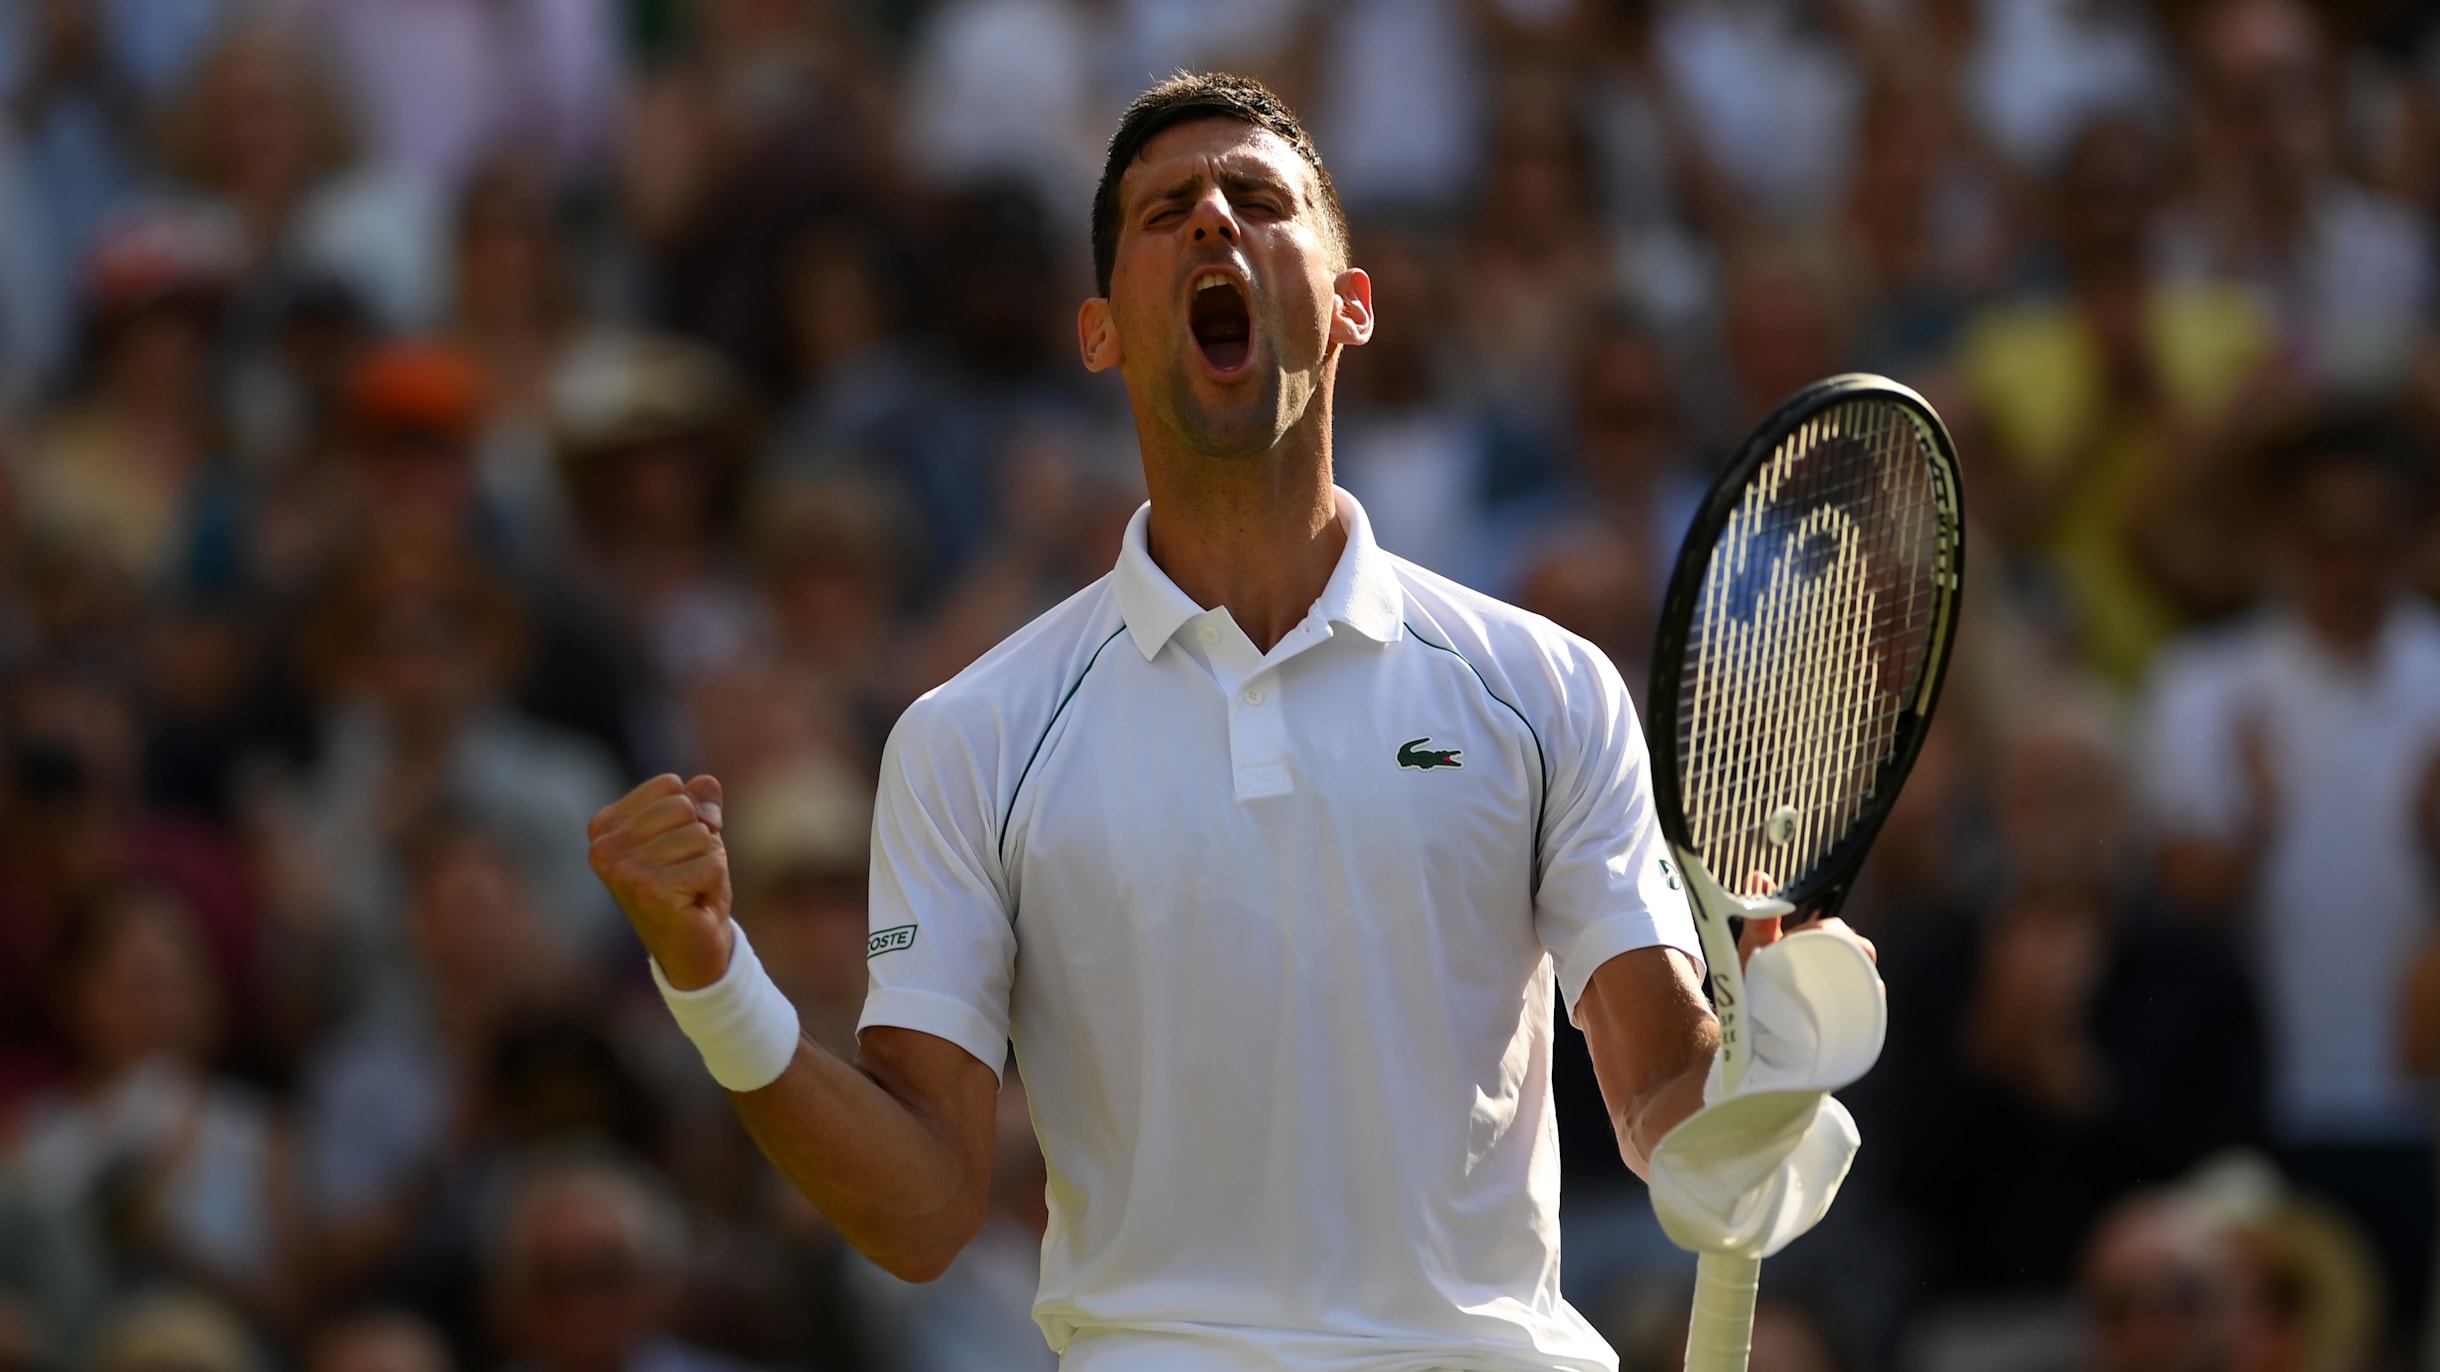 Wimbledon 2022 final Novak Djokovic vs Nick Kyrgios, watch live streaming and telecast in India